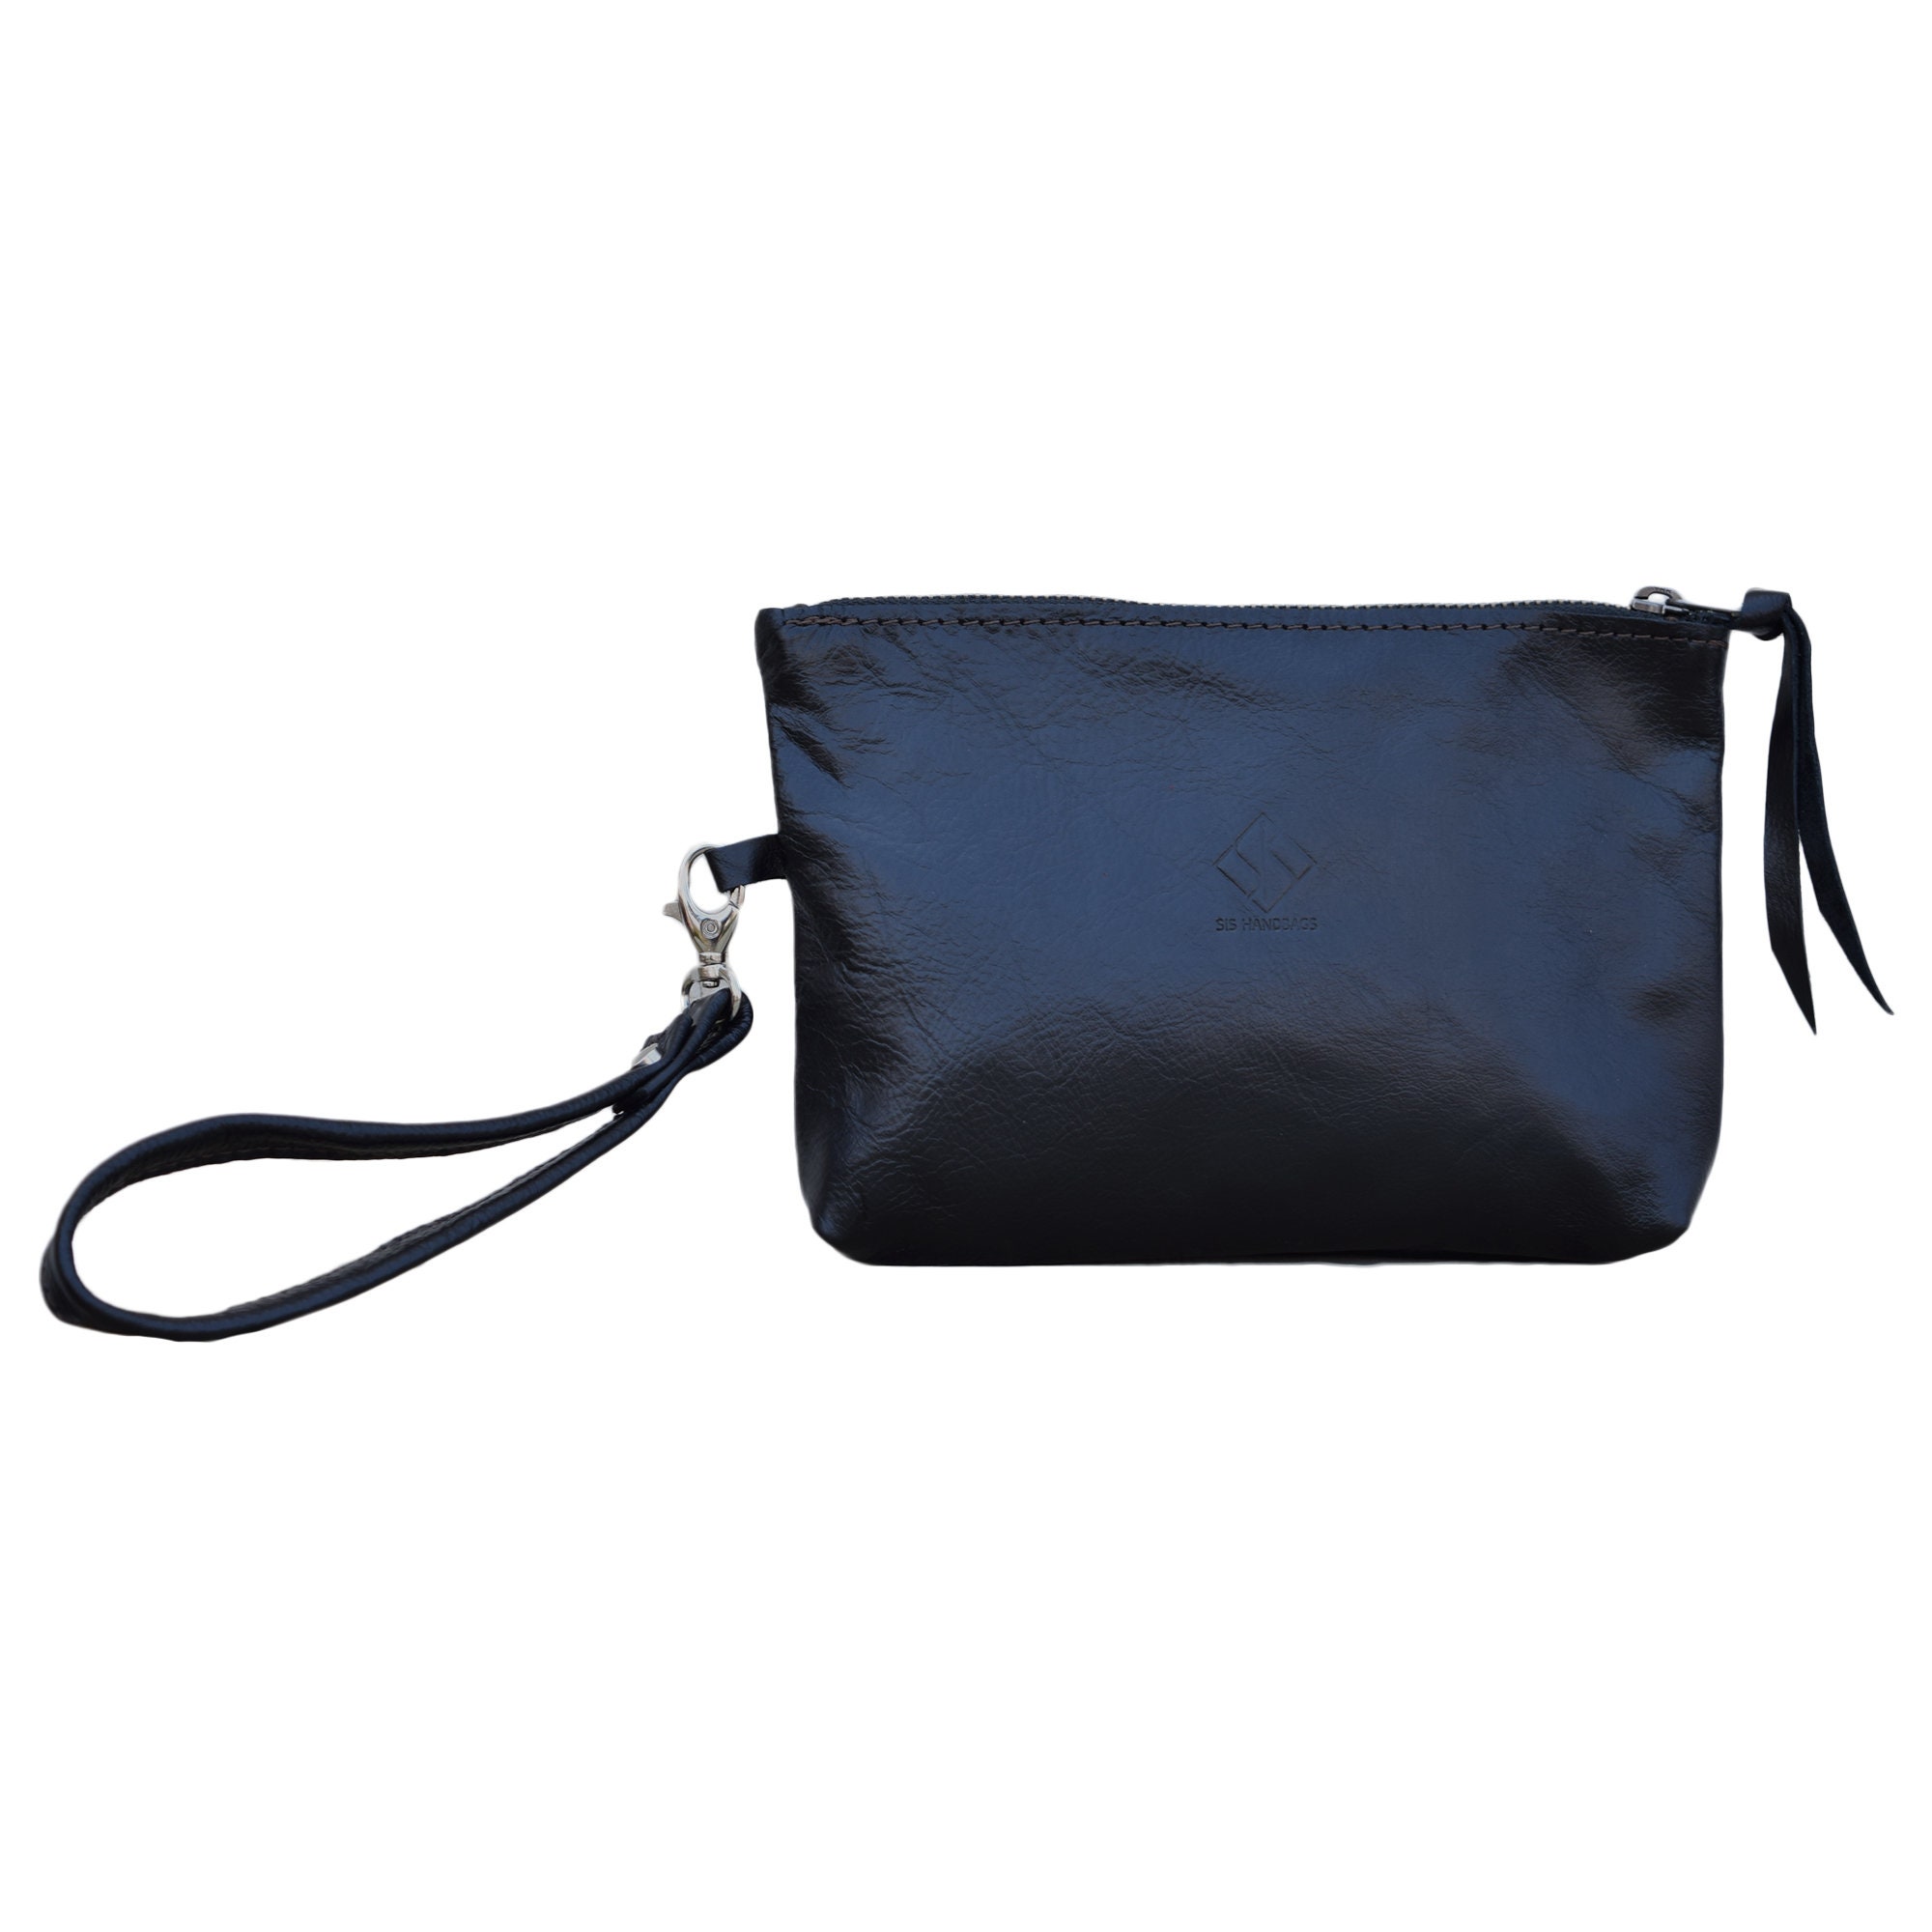 Small Black Wristlet Bag - Black Formal Clutch Bag - Small Evening